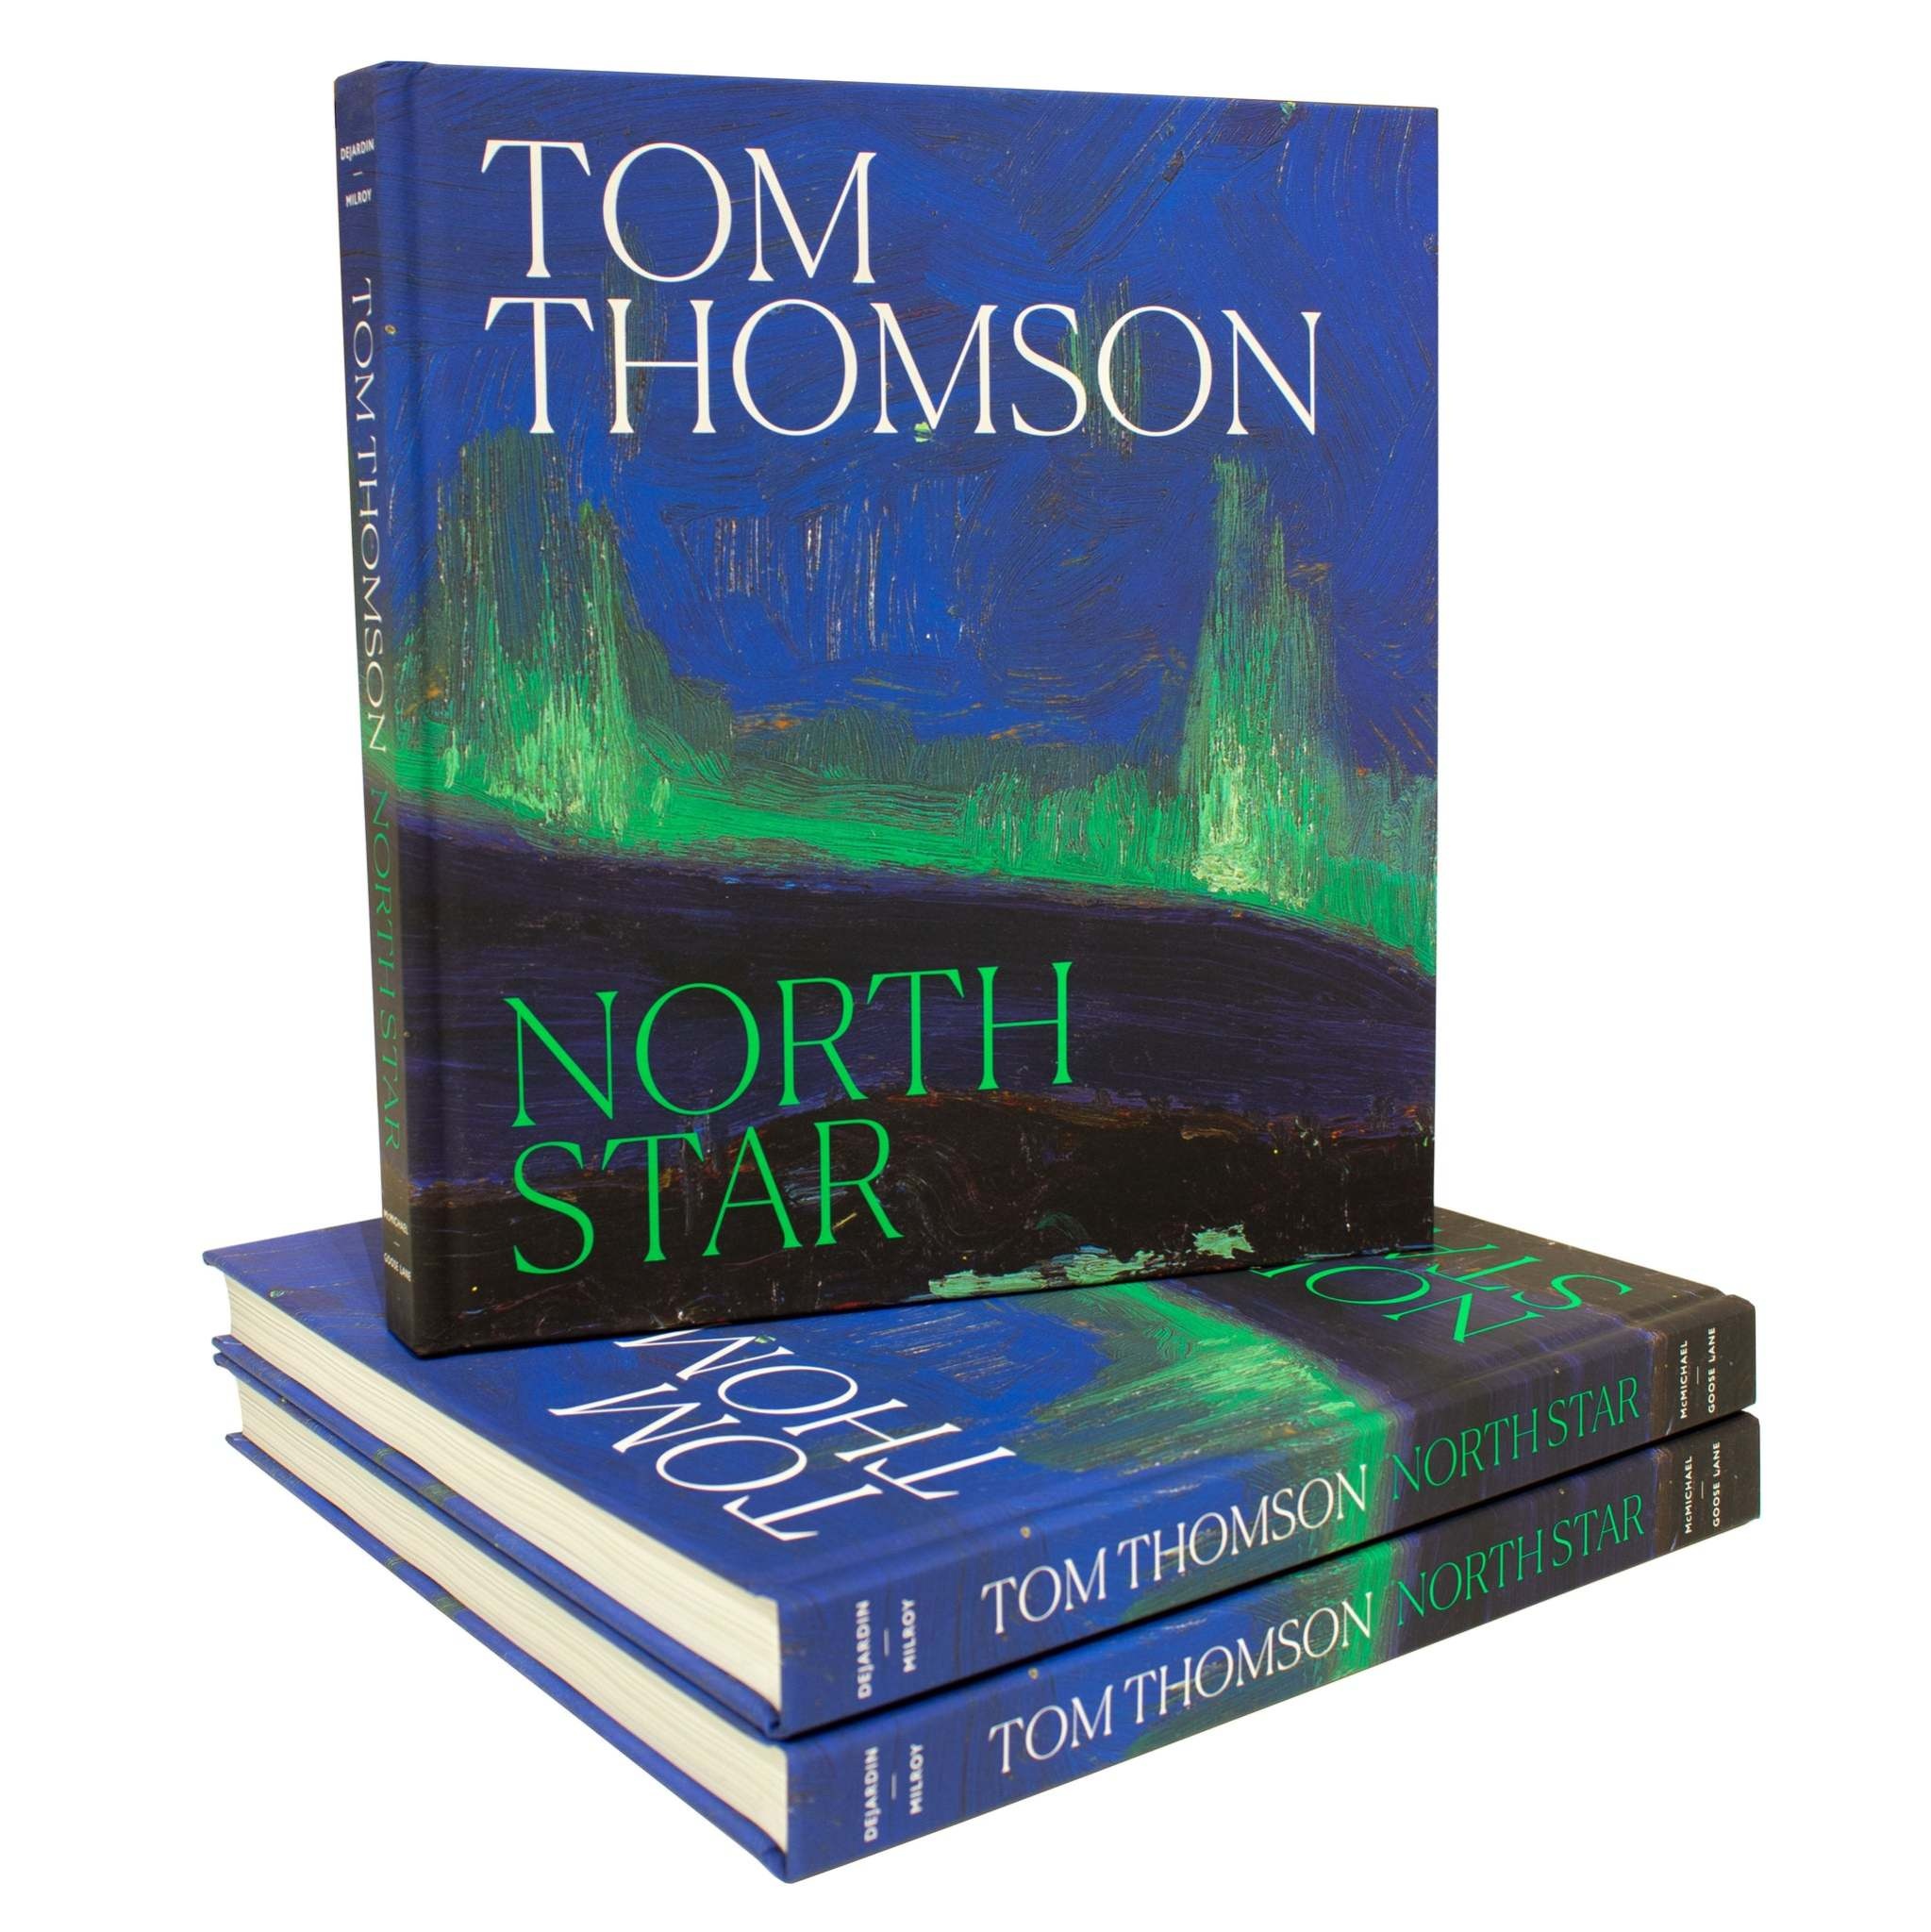 Tom Thomson - North Star